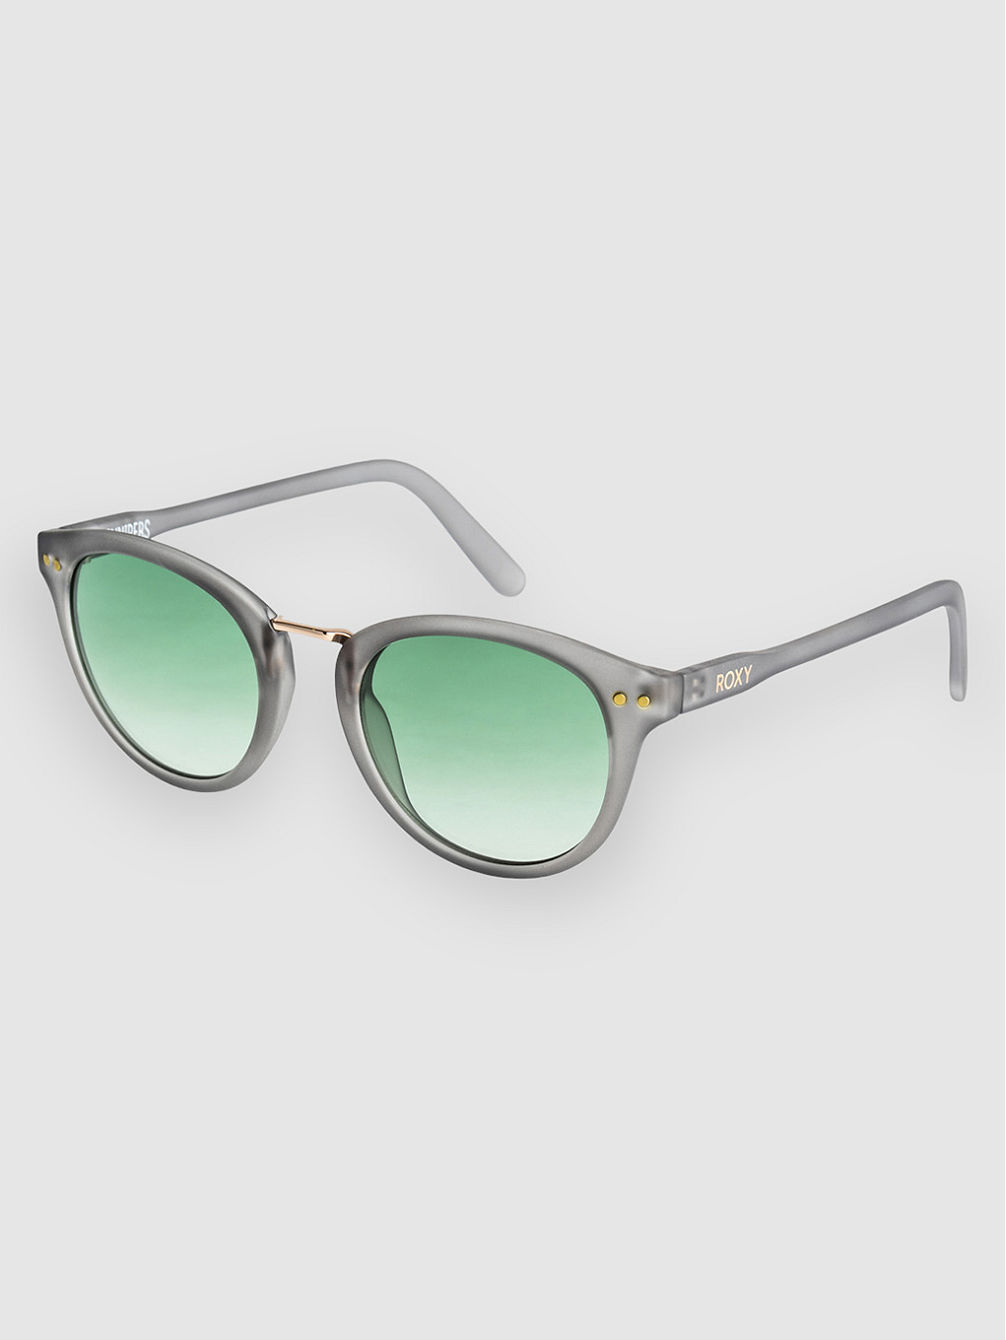 Junipers Crystal Grey Sonnenbrille